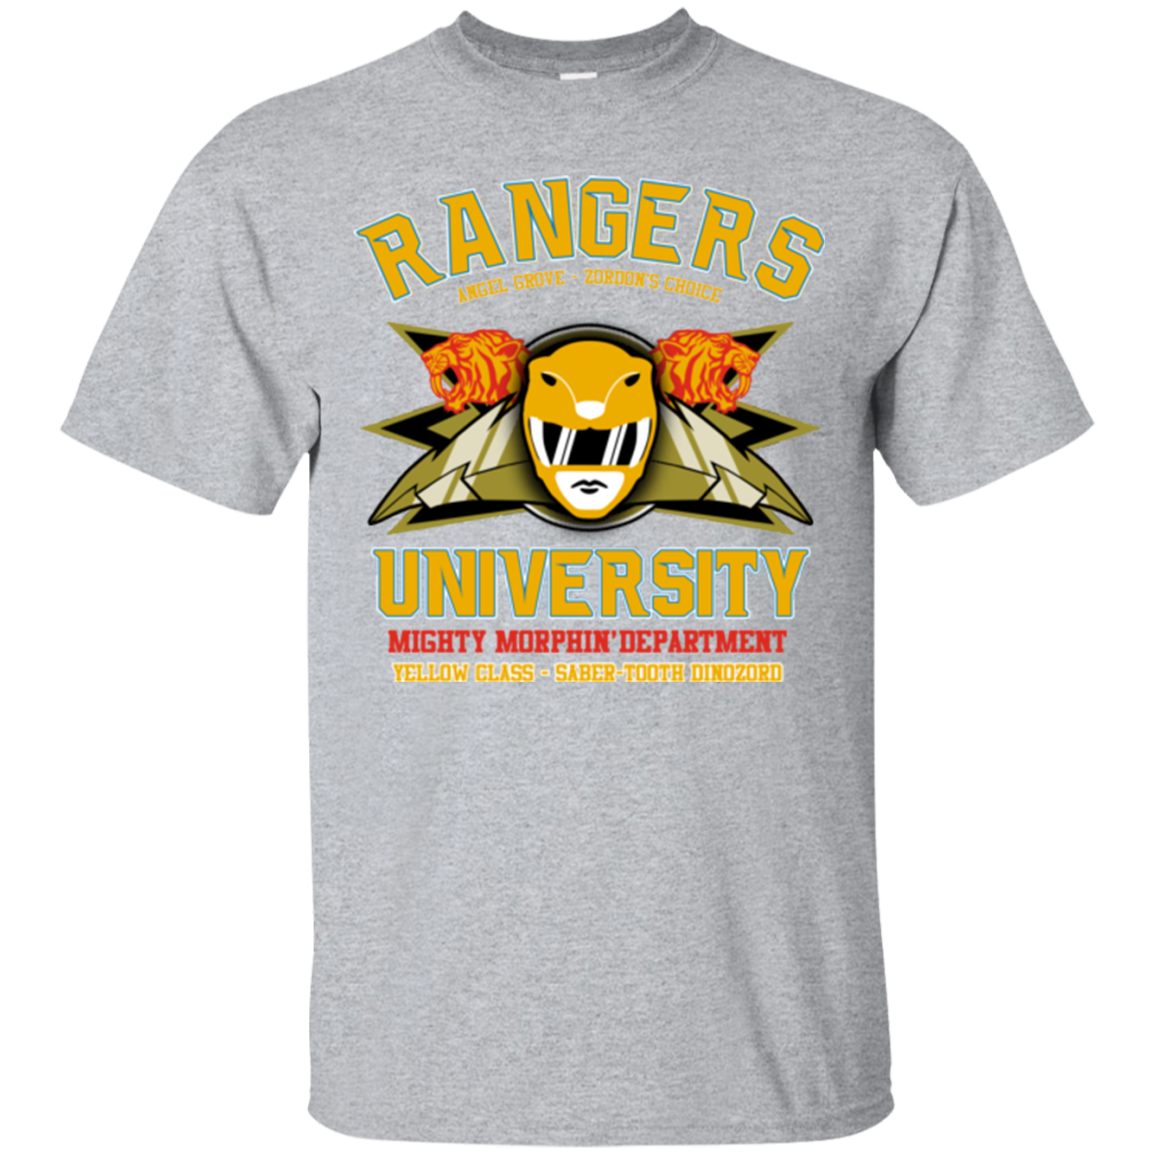 Rangers U Yellow Ranger T-Shirt